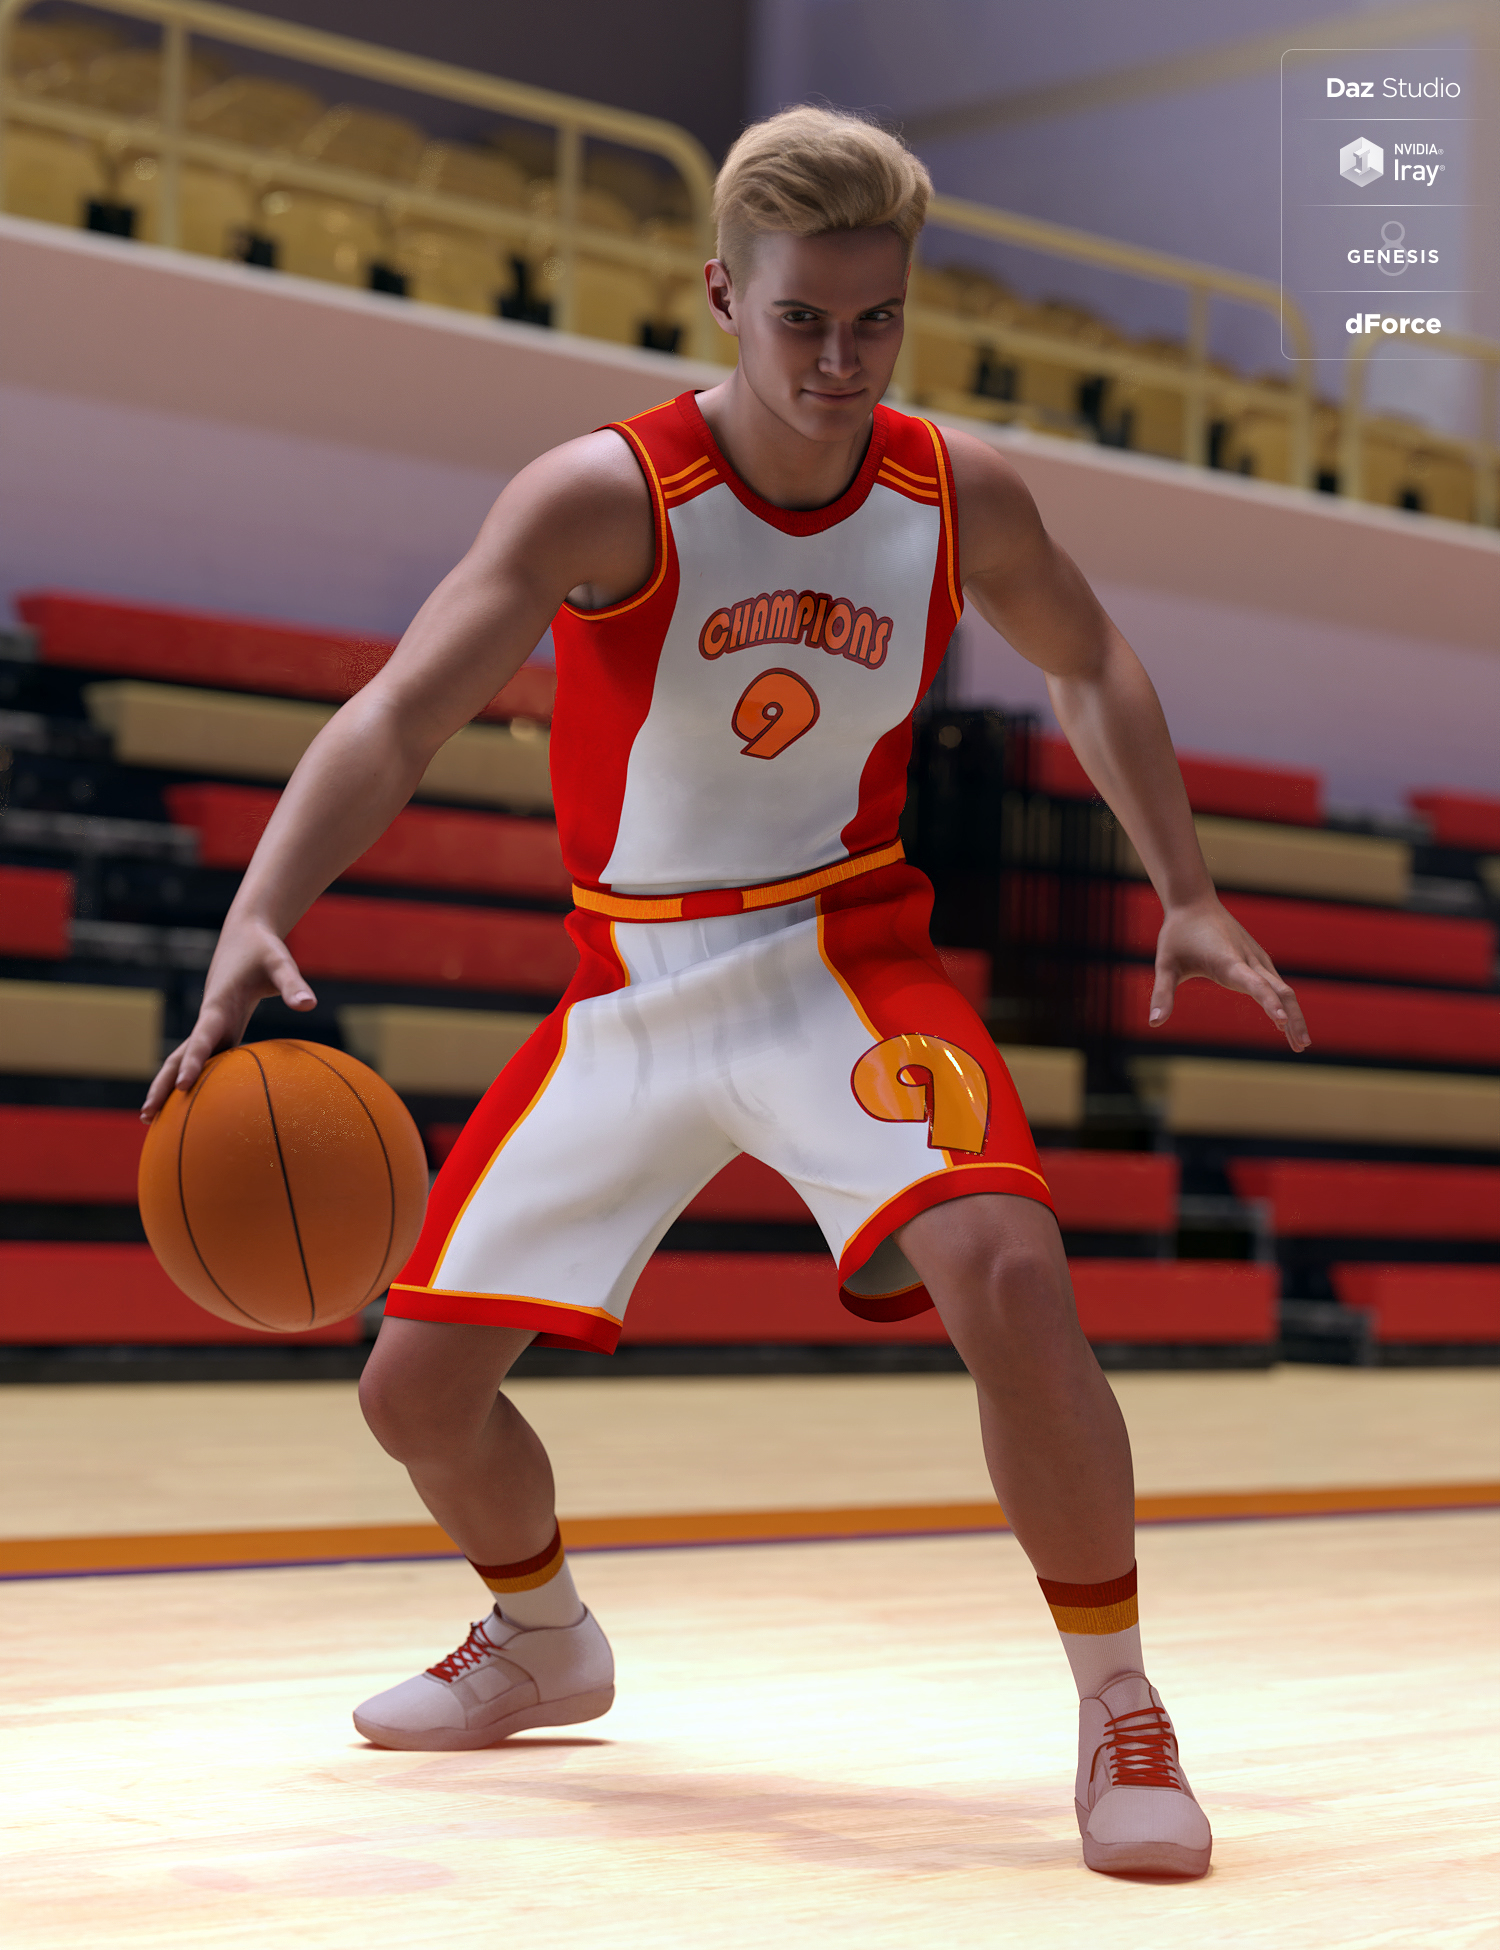 dForce Basketball Uniform Textures by: Shox-Design, 3D Models by Daz 3D